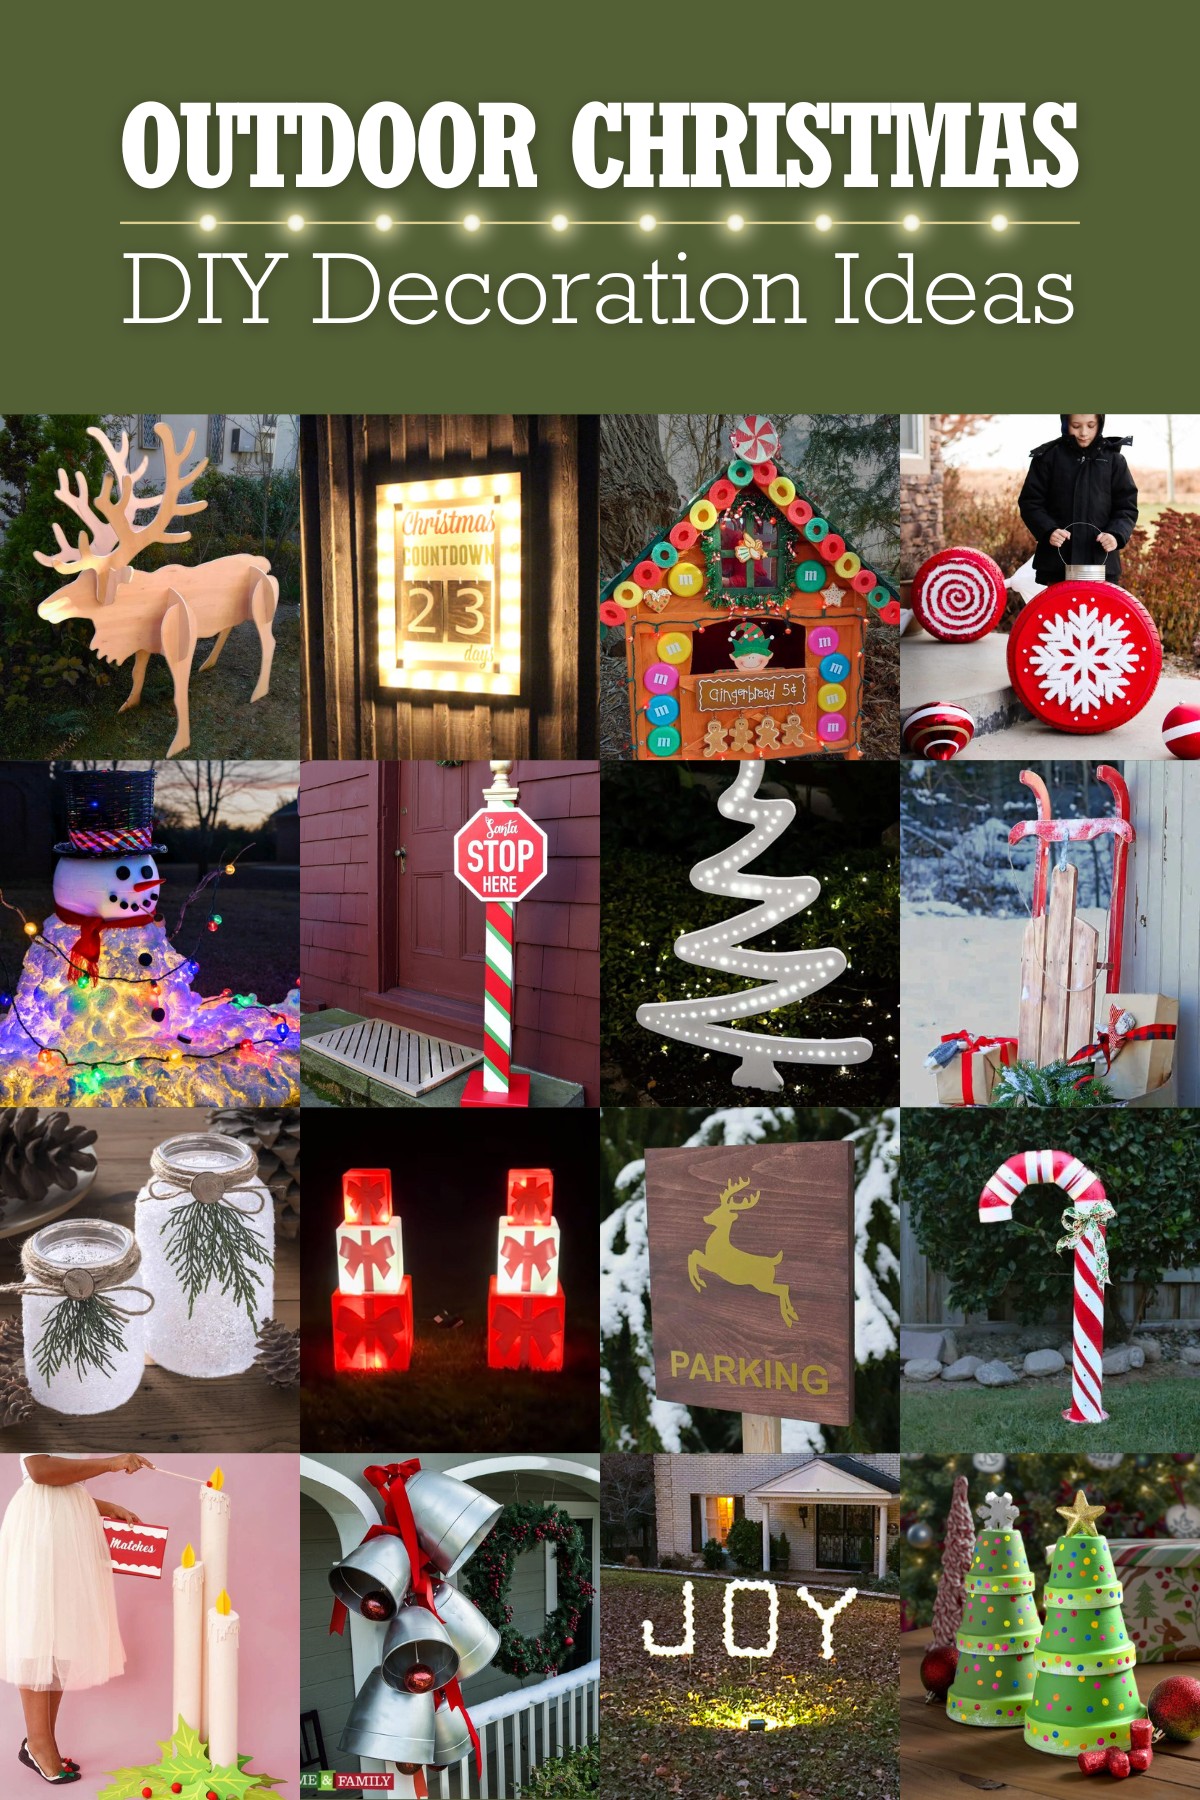 DIY Outdoor Christmas Decorations